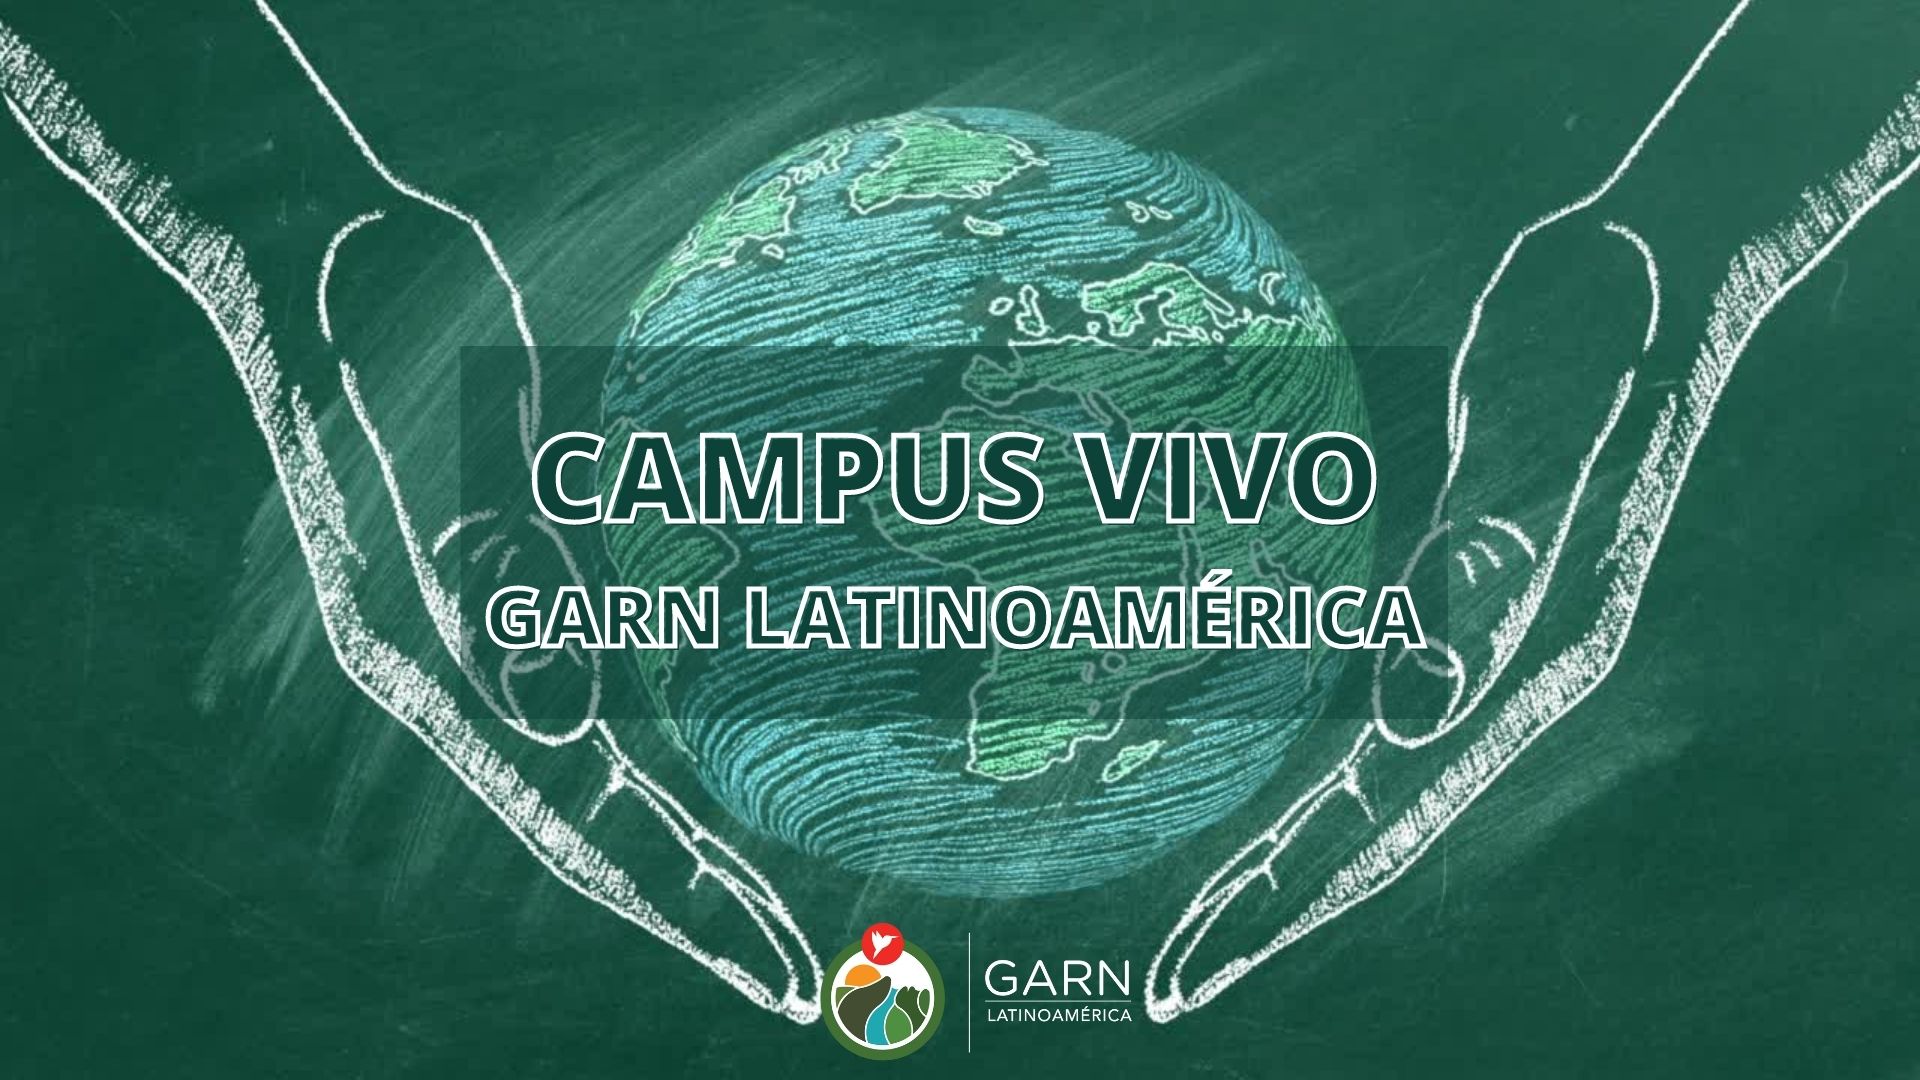 GARN Latinamerica - Rights Of Nature